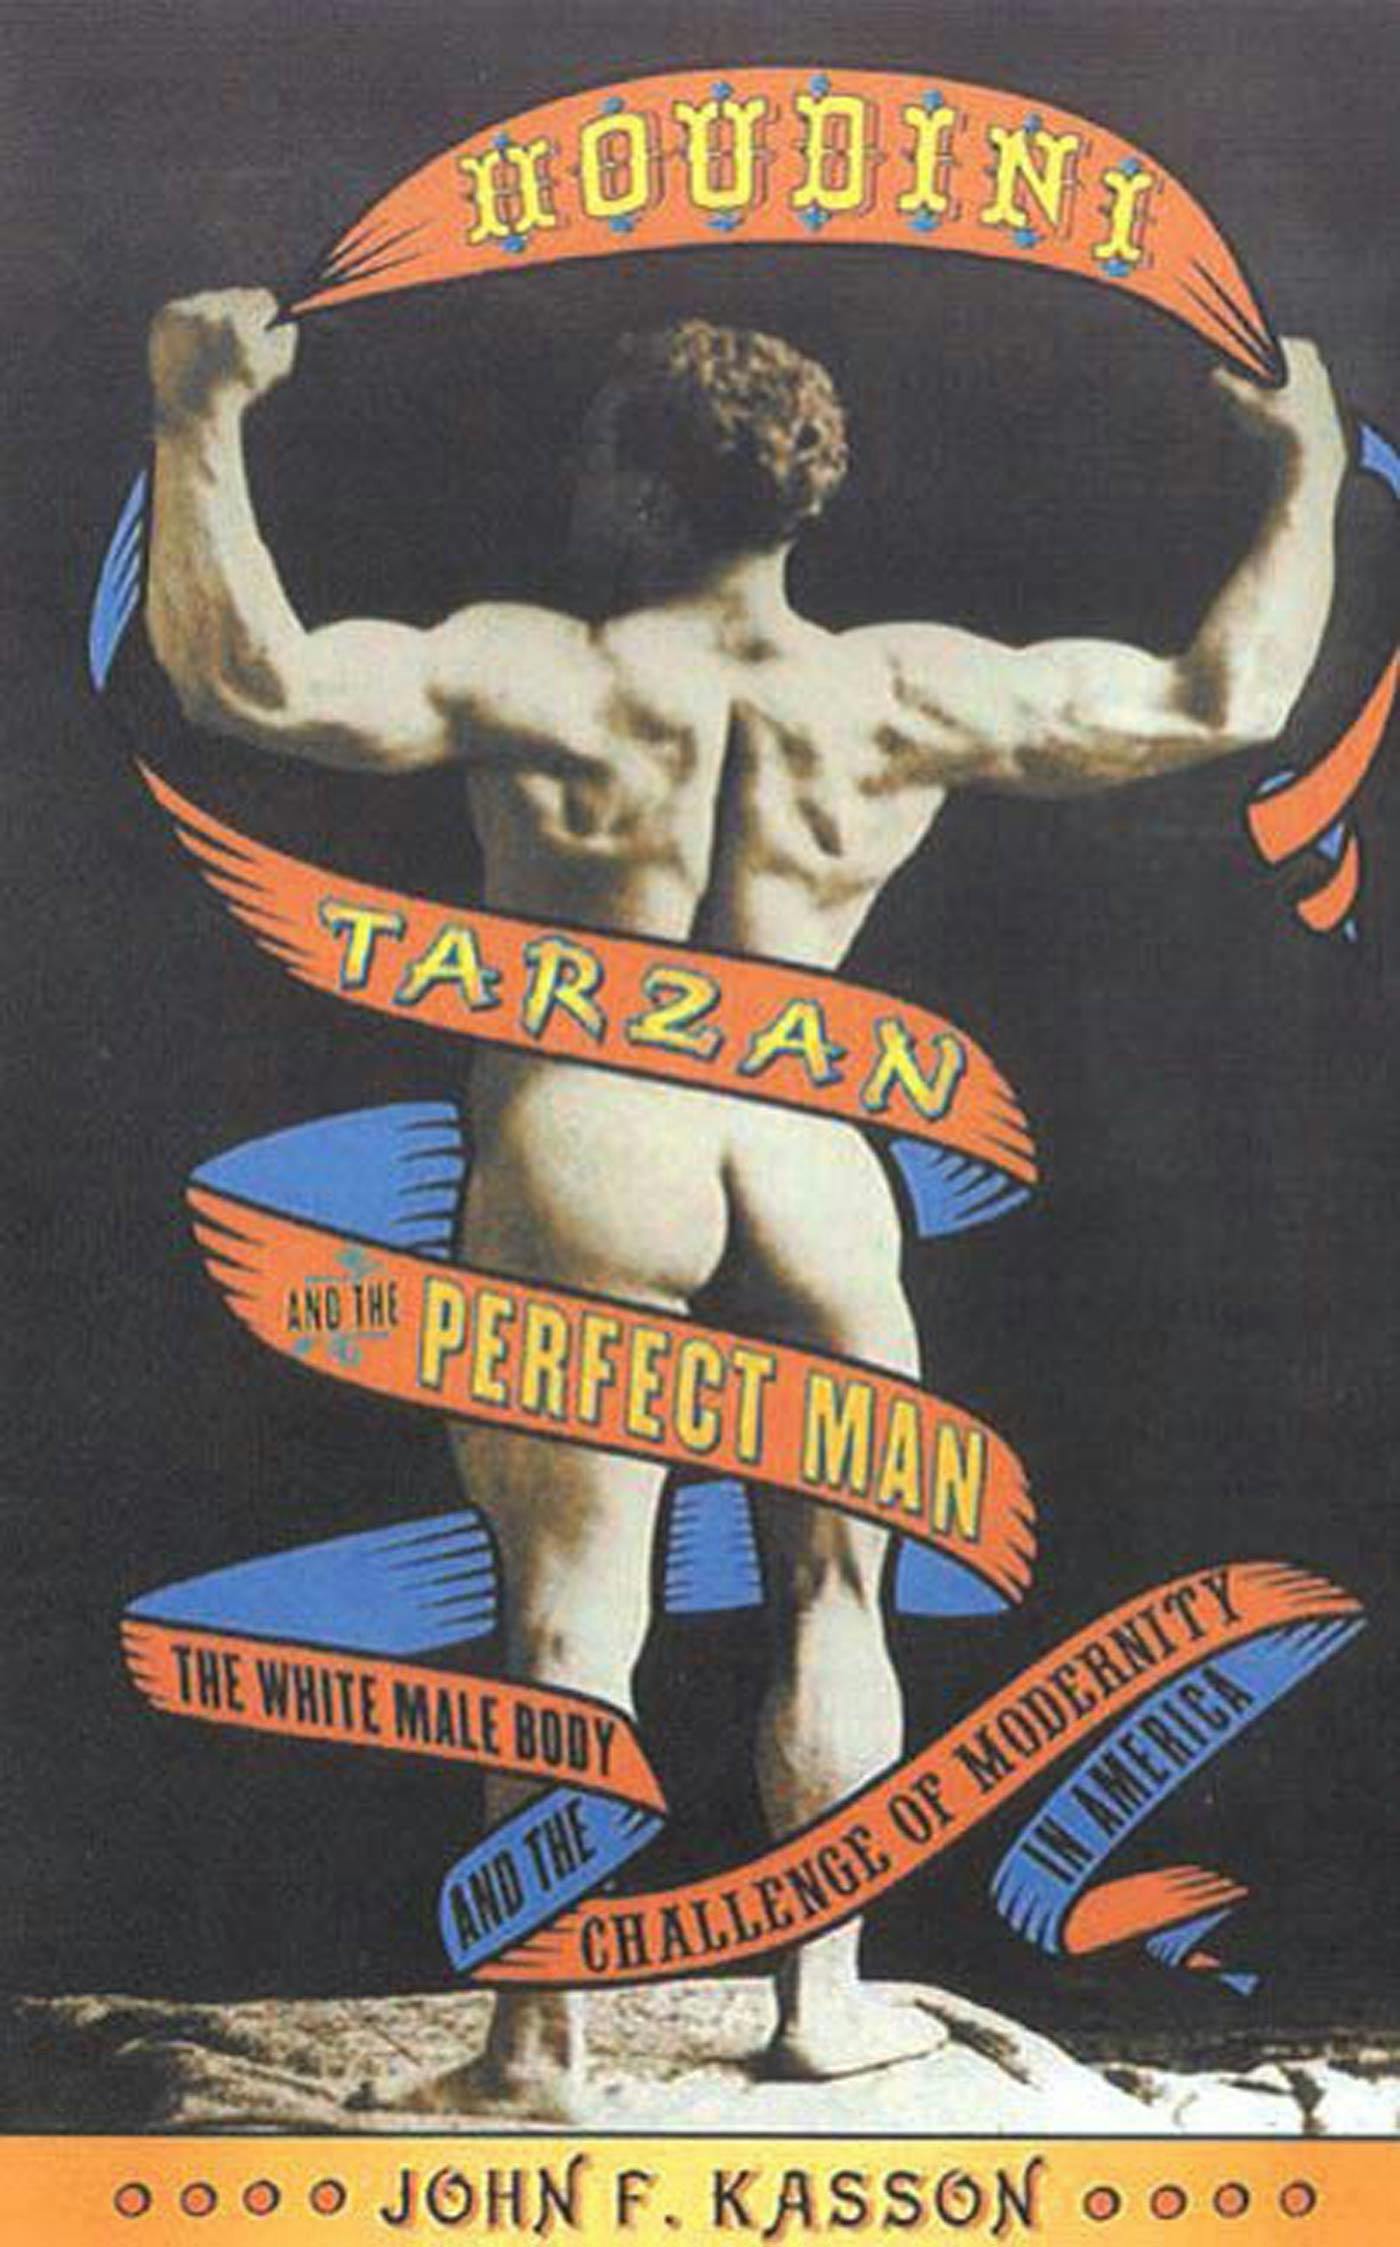 Vintage Nudist Beauty Contests - Houdini, Tarzan, and the Perfect Man